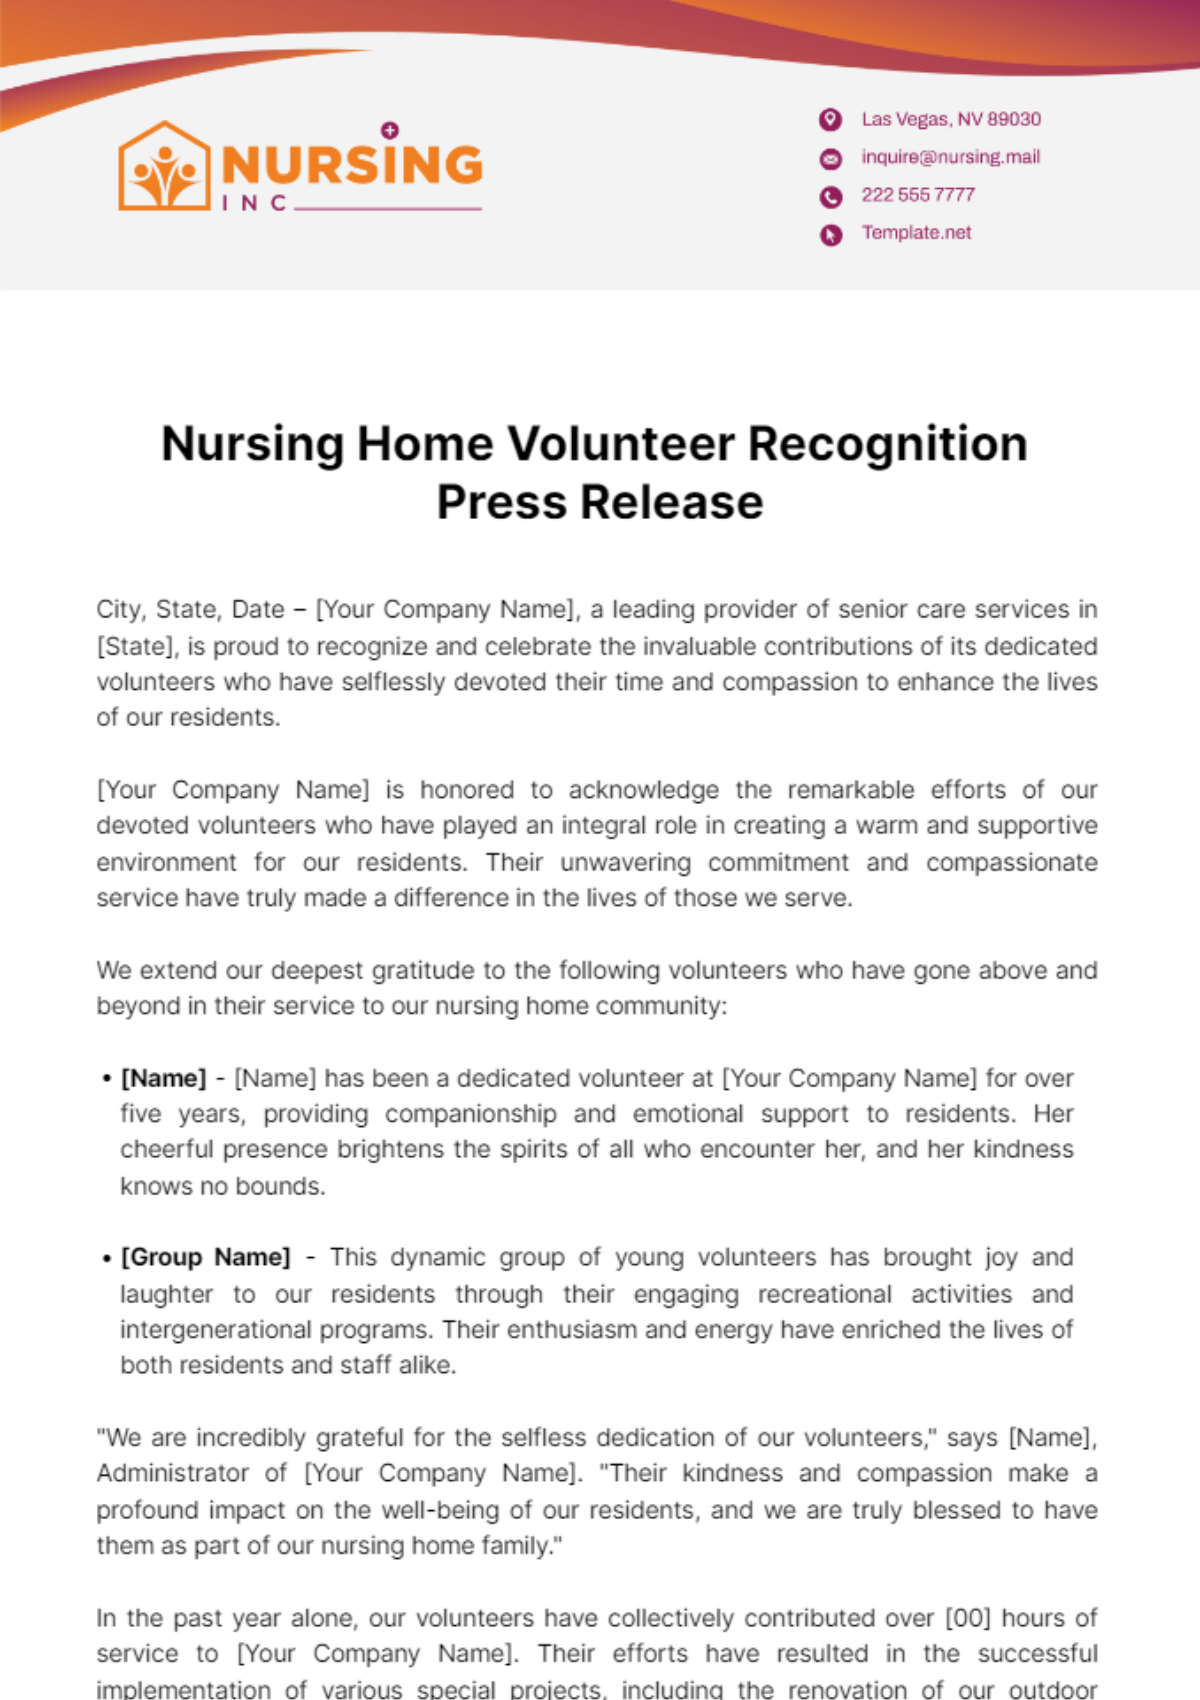 Nursing Home Volunteer Recognition Press Release Template